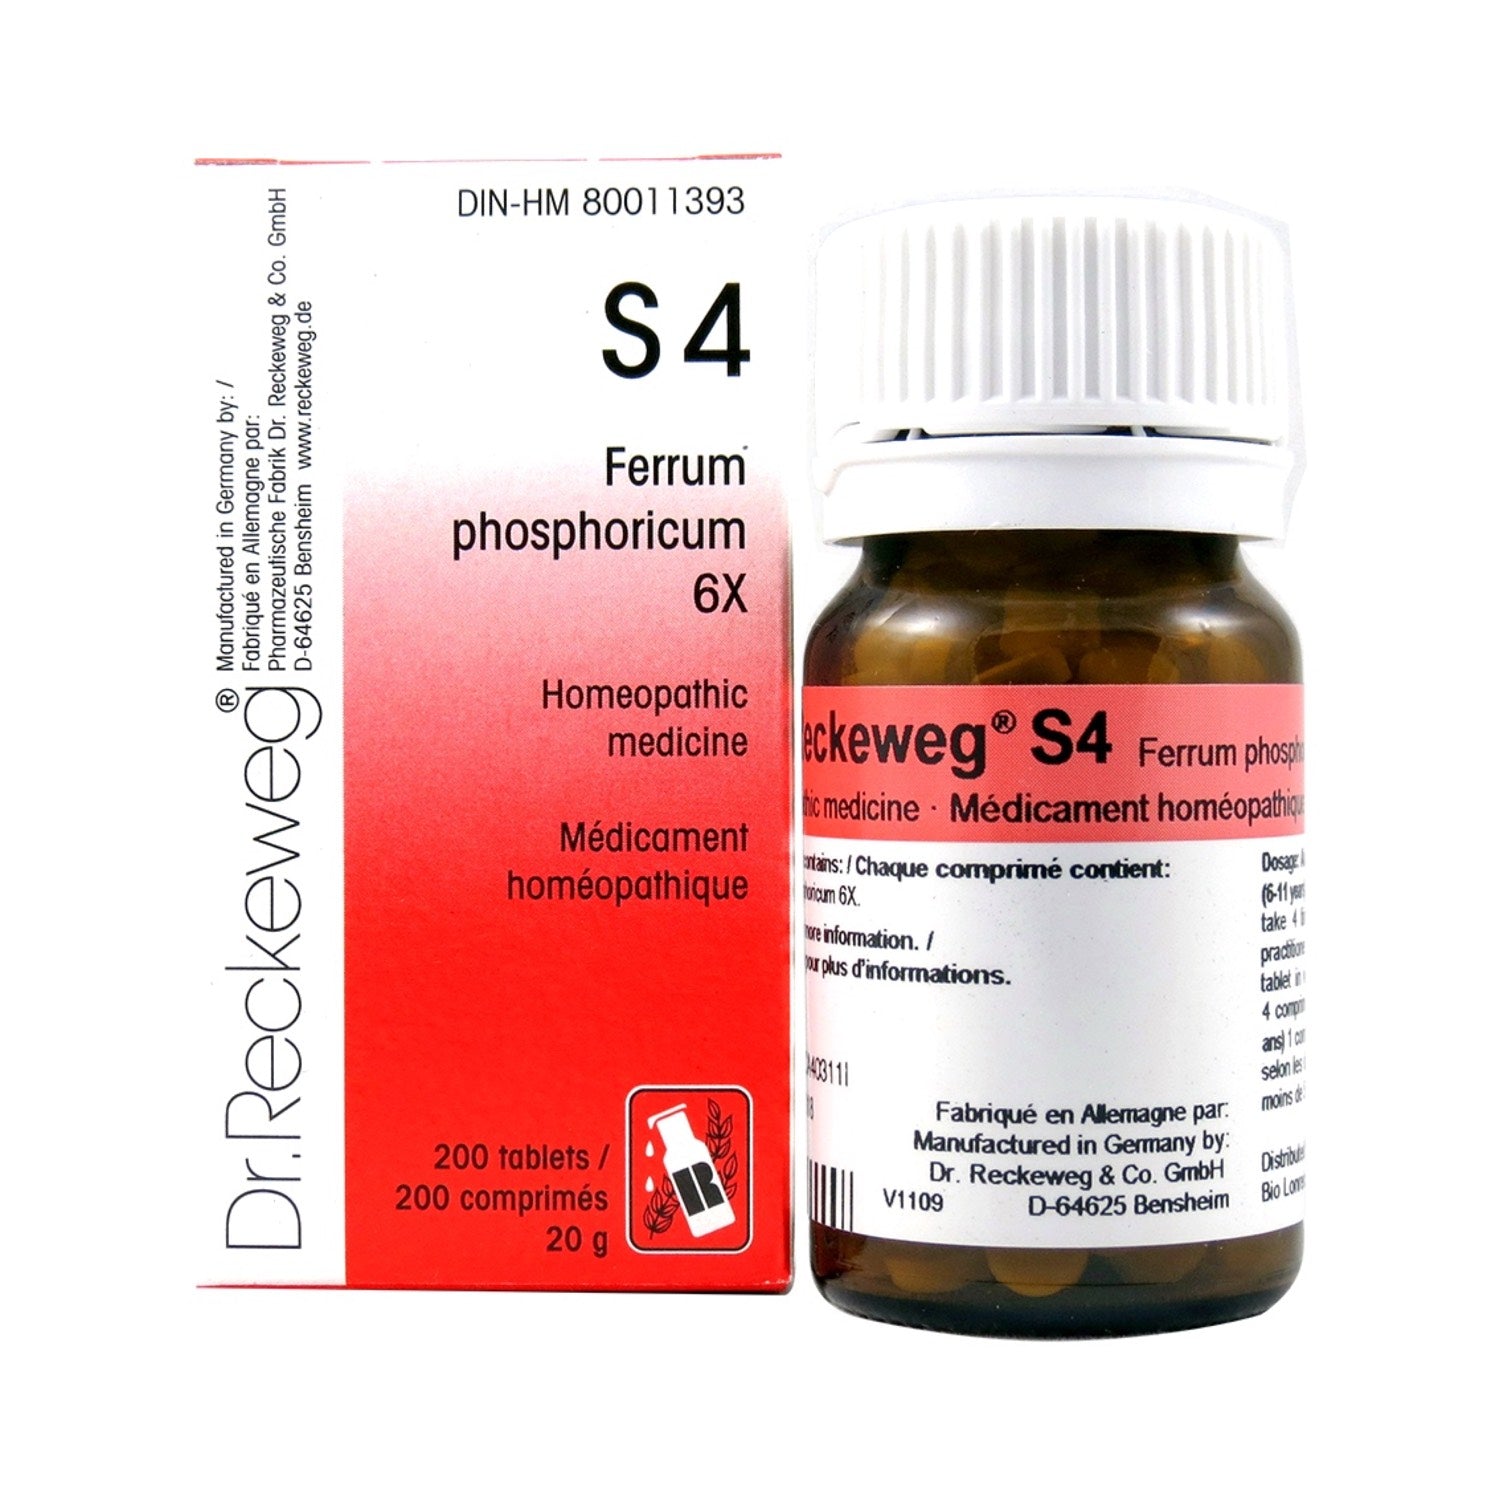 S4 Ferrum phosphoricum, oxygen carrier, Schuessler salt  6X and 200 tablets (20 g)